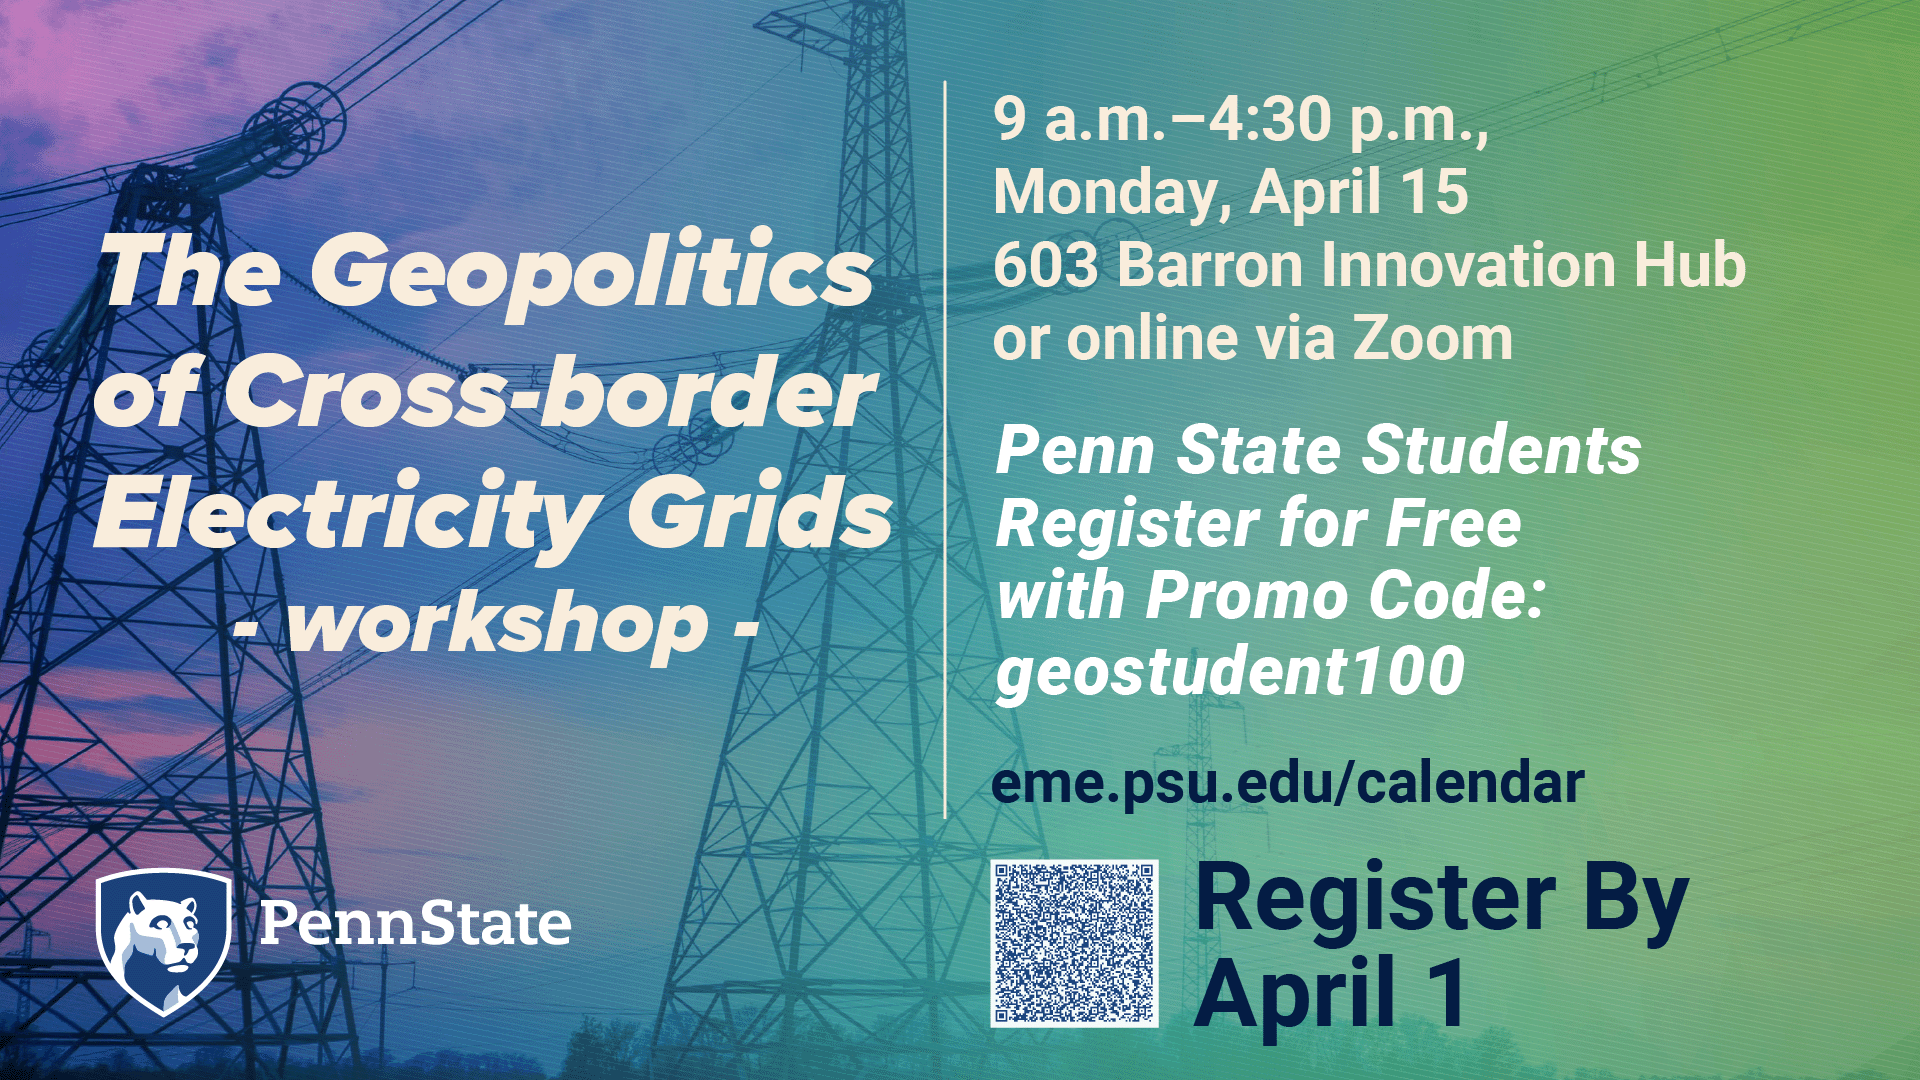 The Geopolitics of Cross-border Electricity Grids Workshop